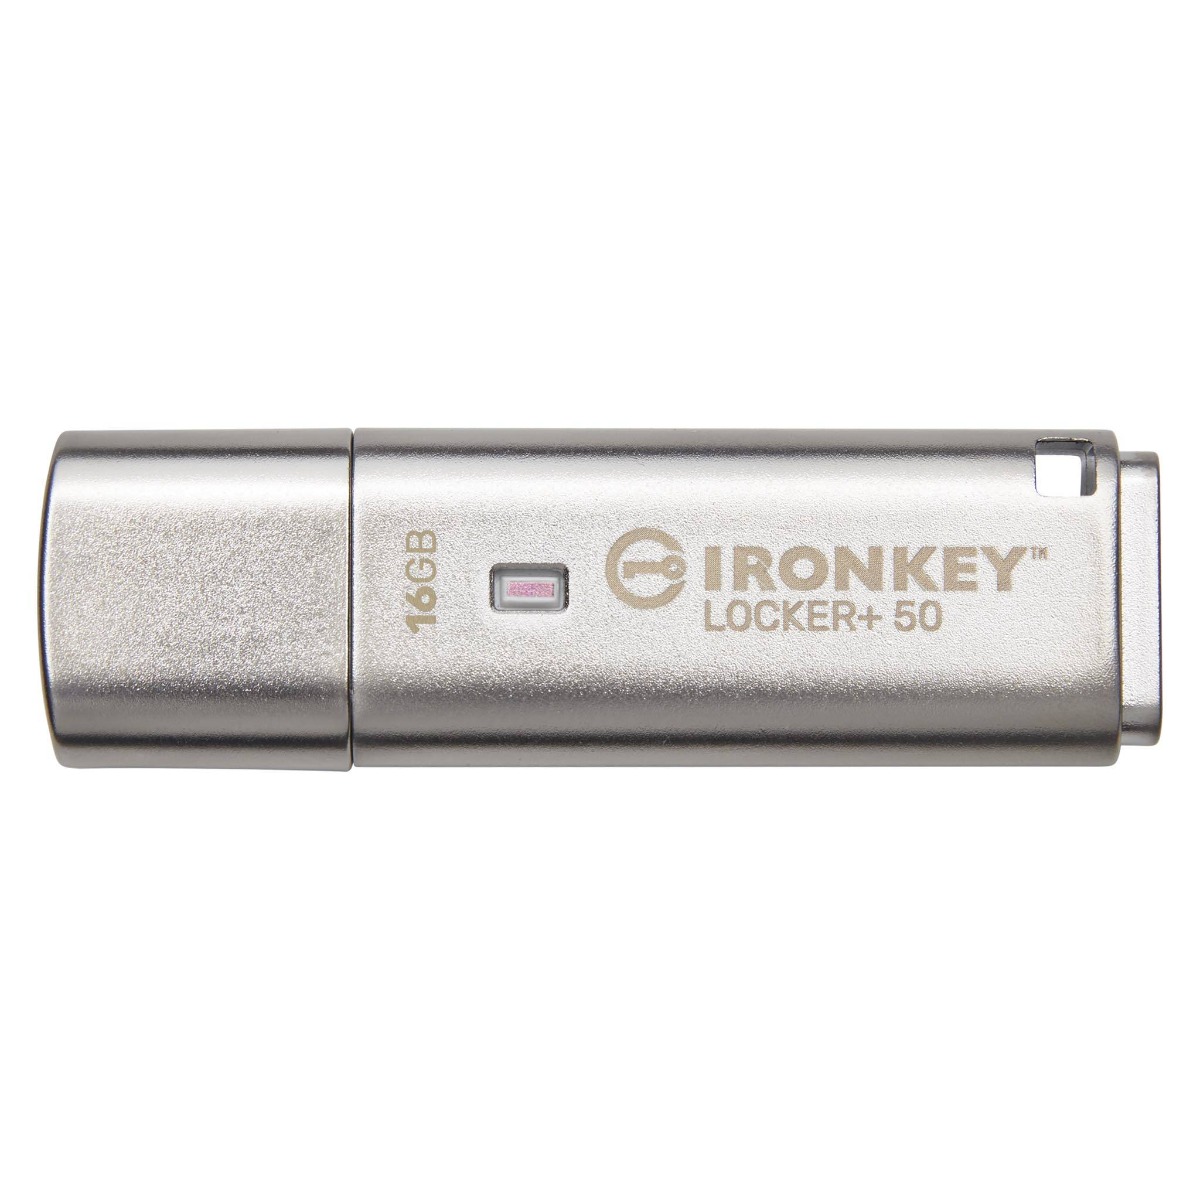 Kingston IronKey Locker+ 50